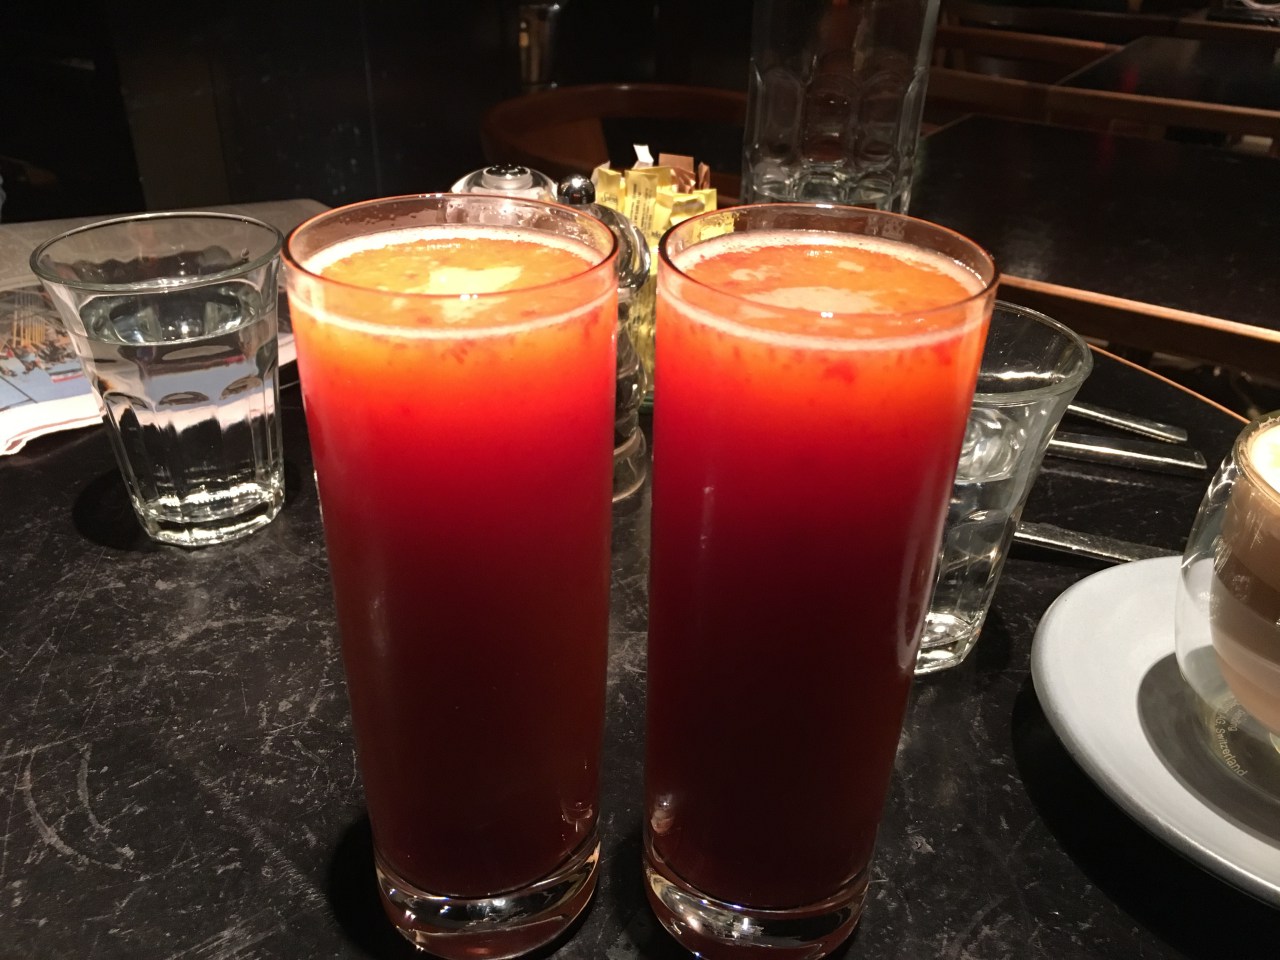 Andaz 5th Avenue Breakfast Review-Strawberry Orange Juice